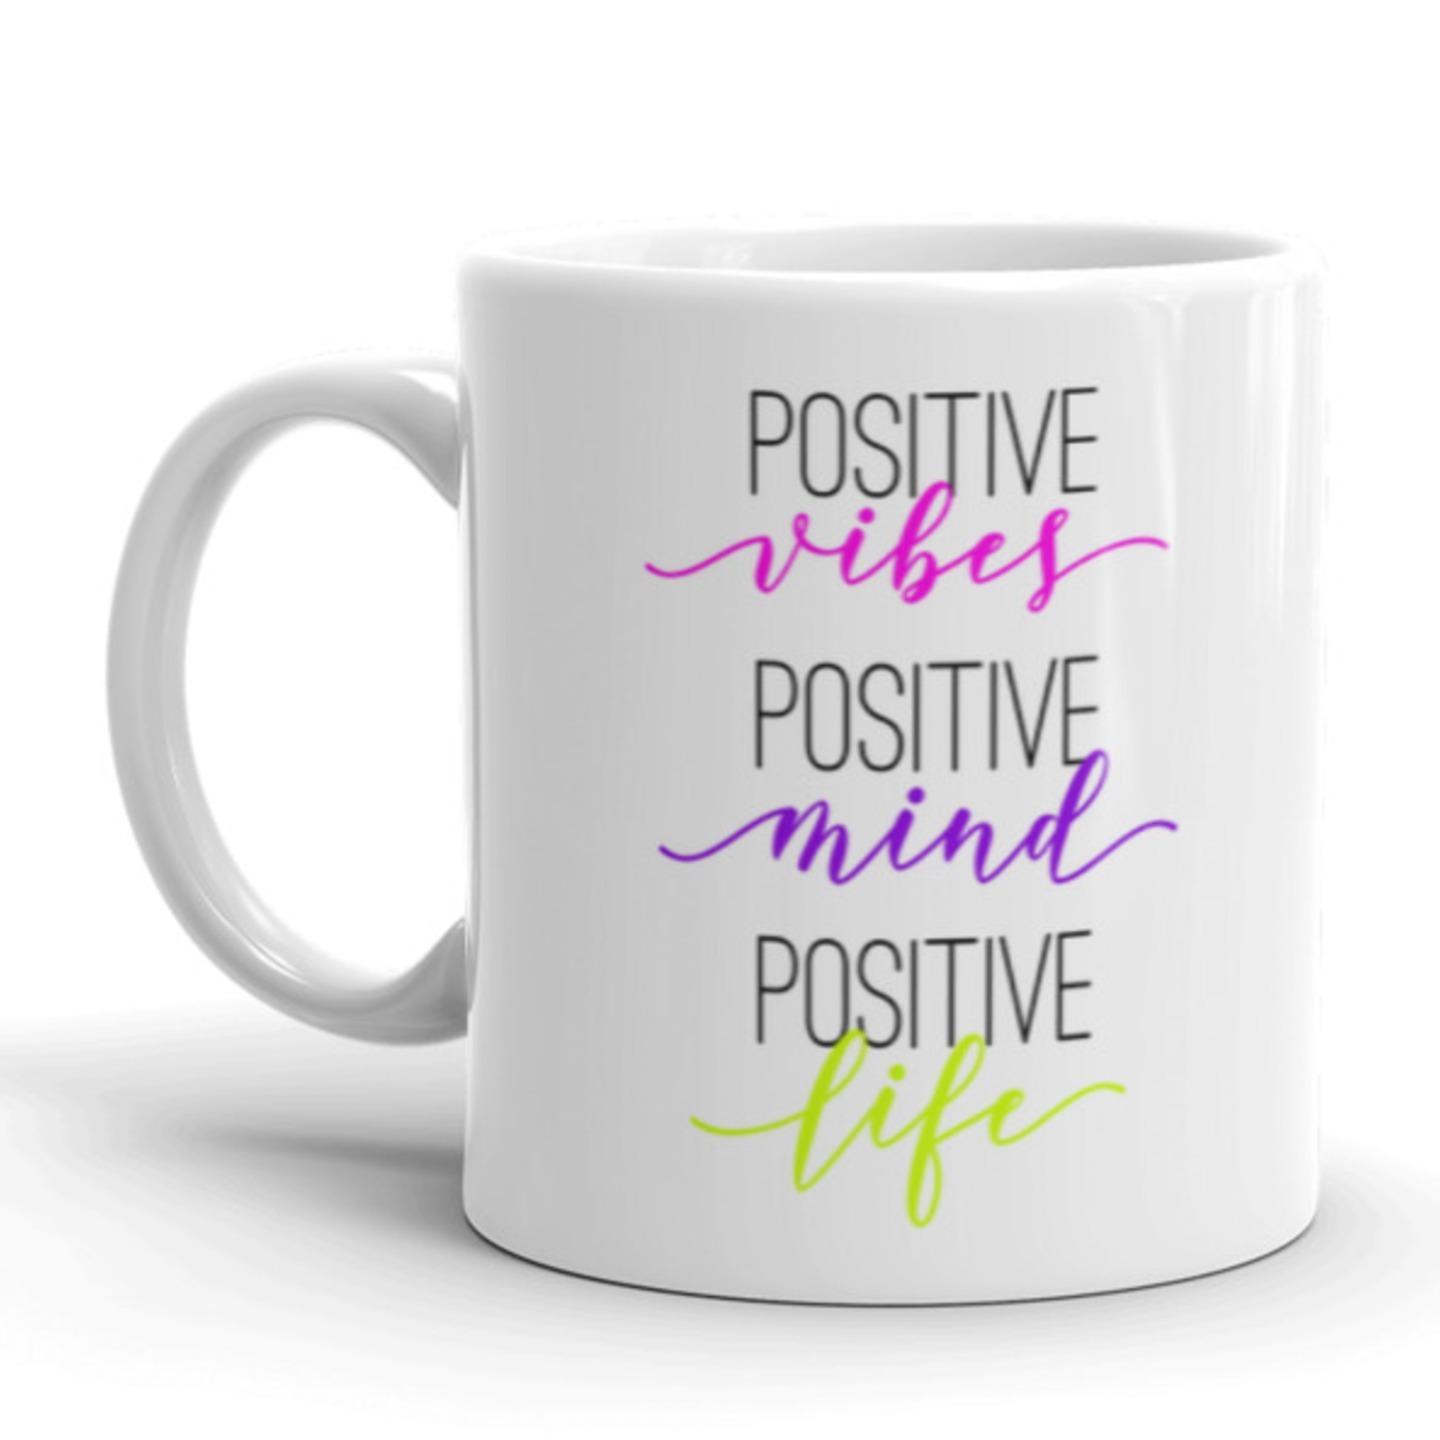 Ceramic Mug - Positive vibes, positive mind. positive life